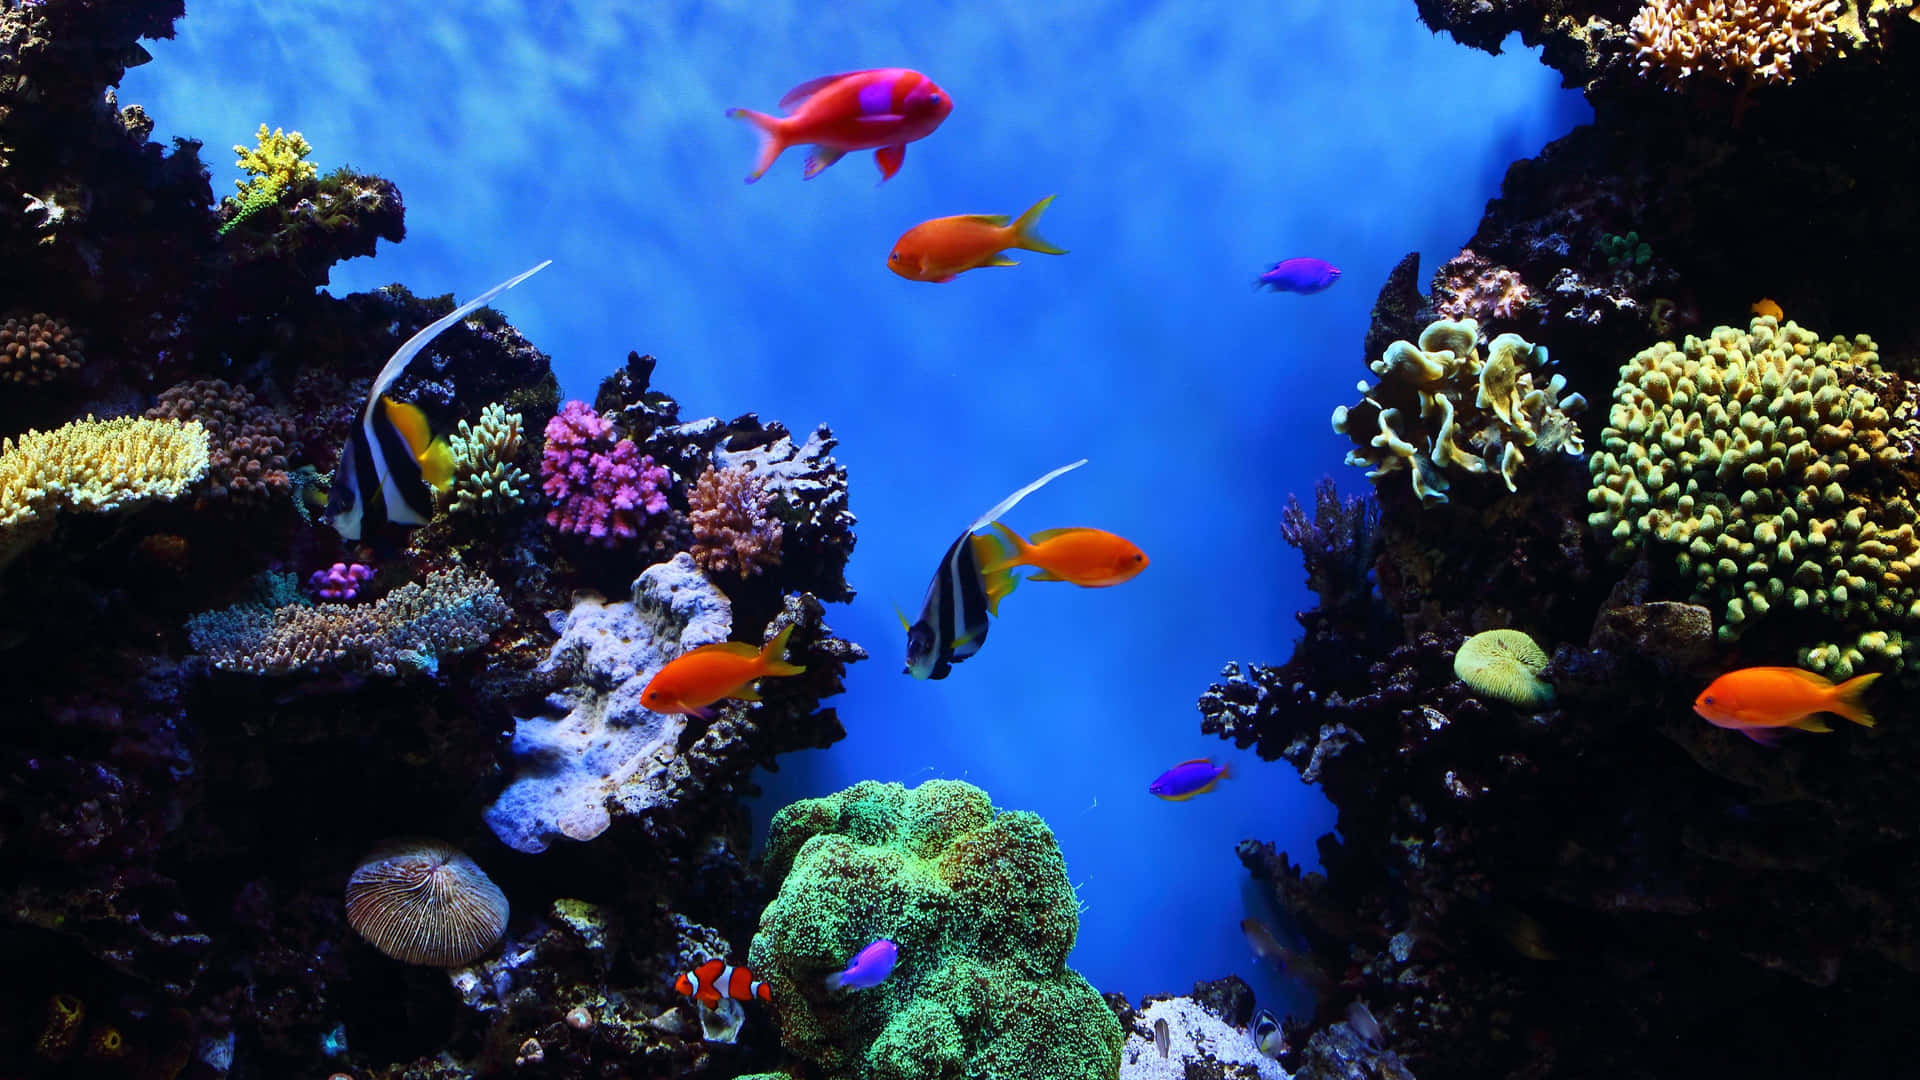 4kfische Verschiedener Arten Unter Wasser Wallpaper